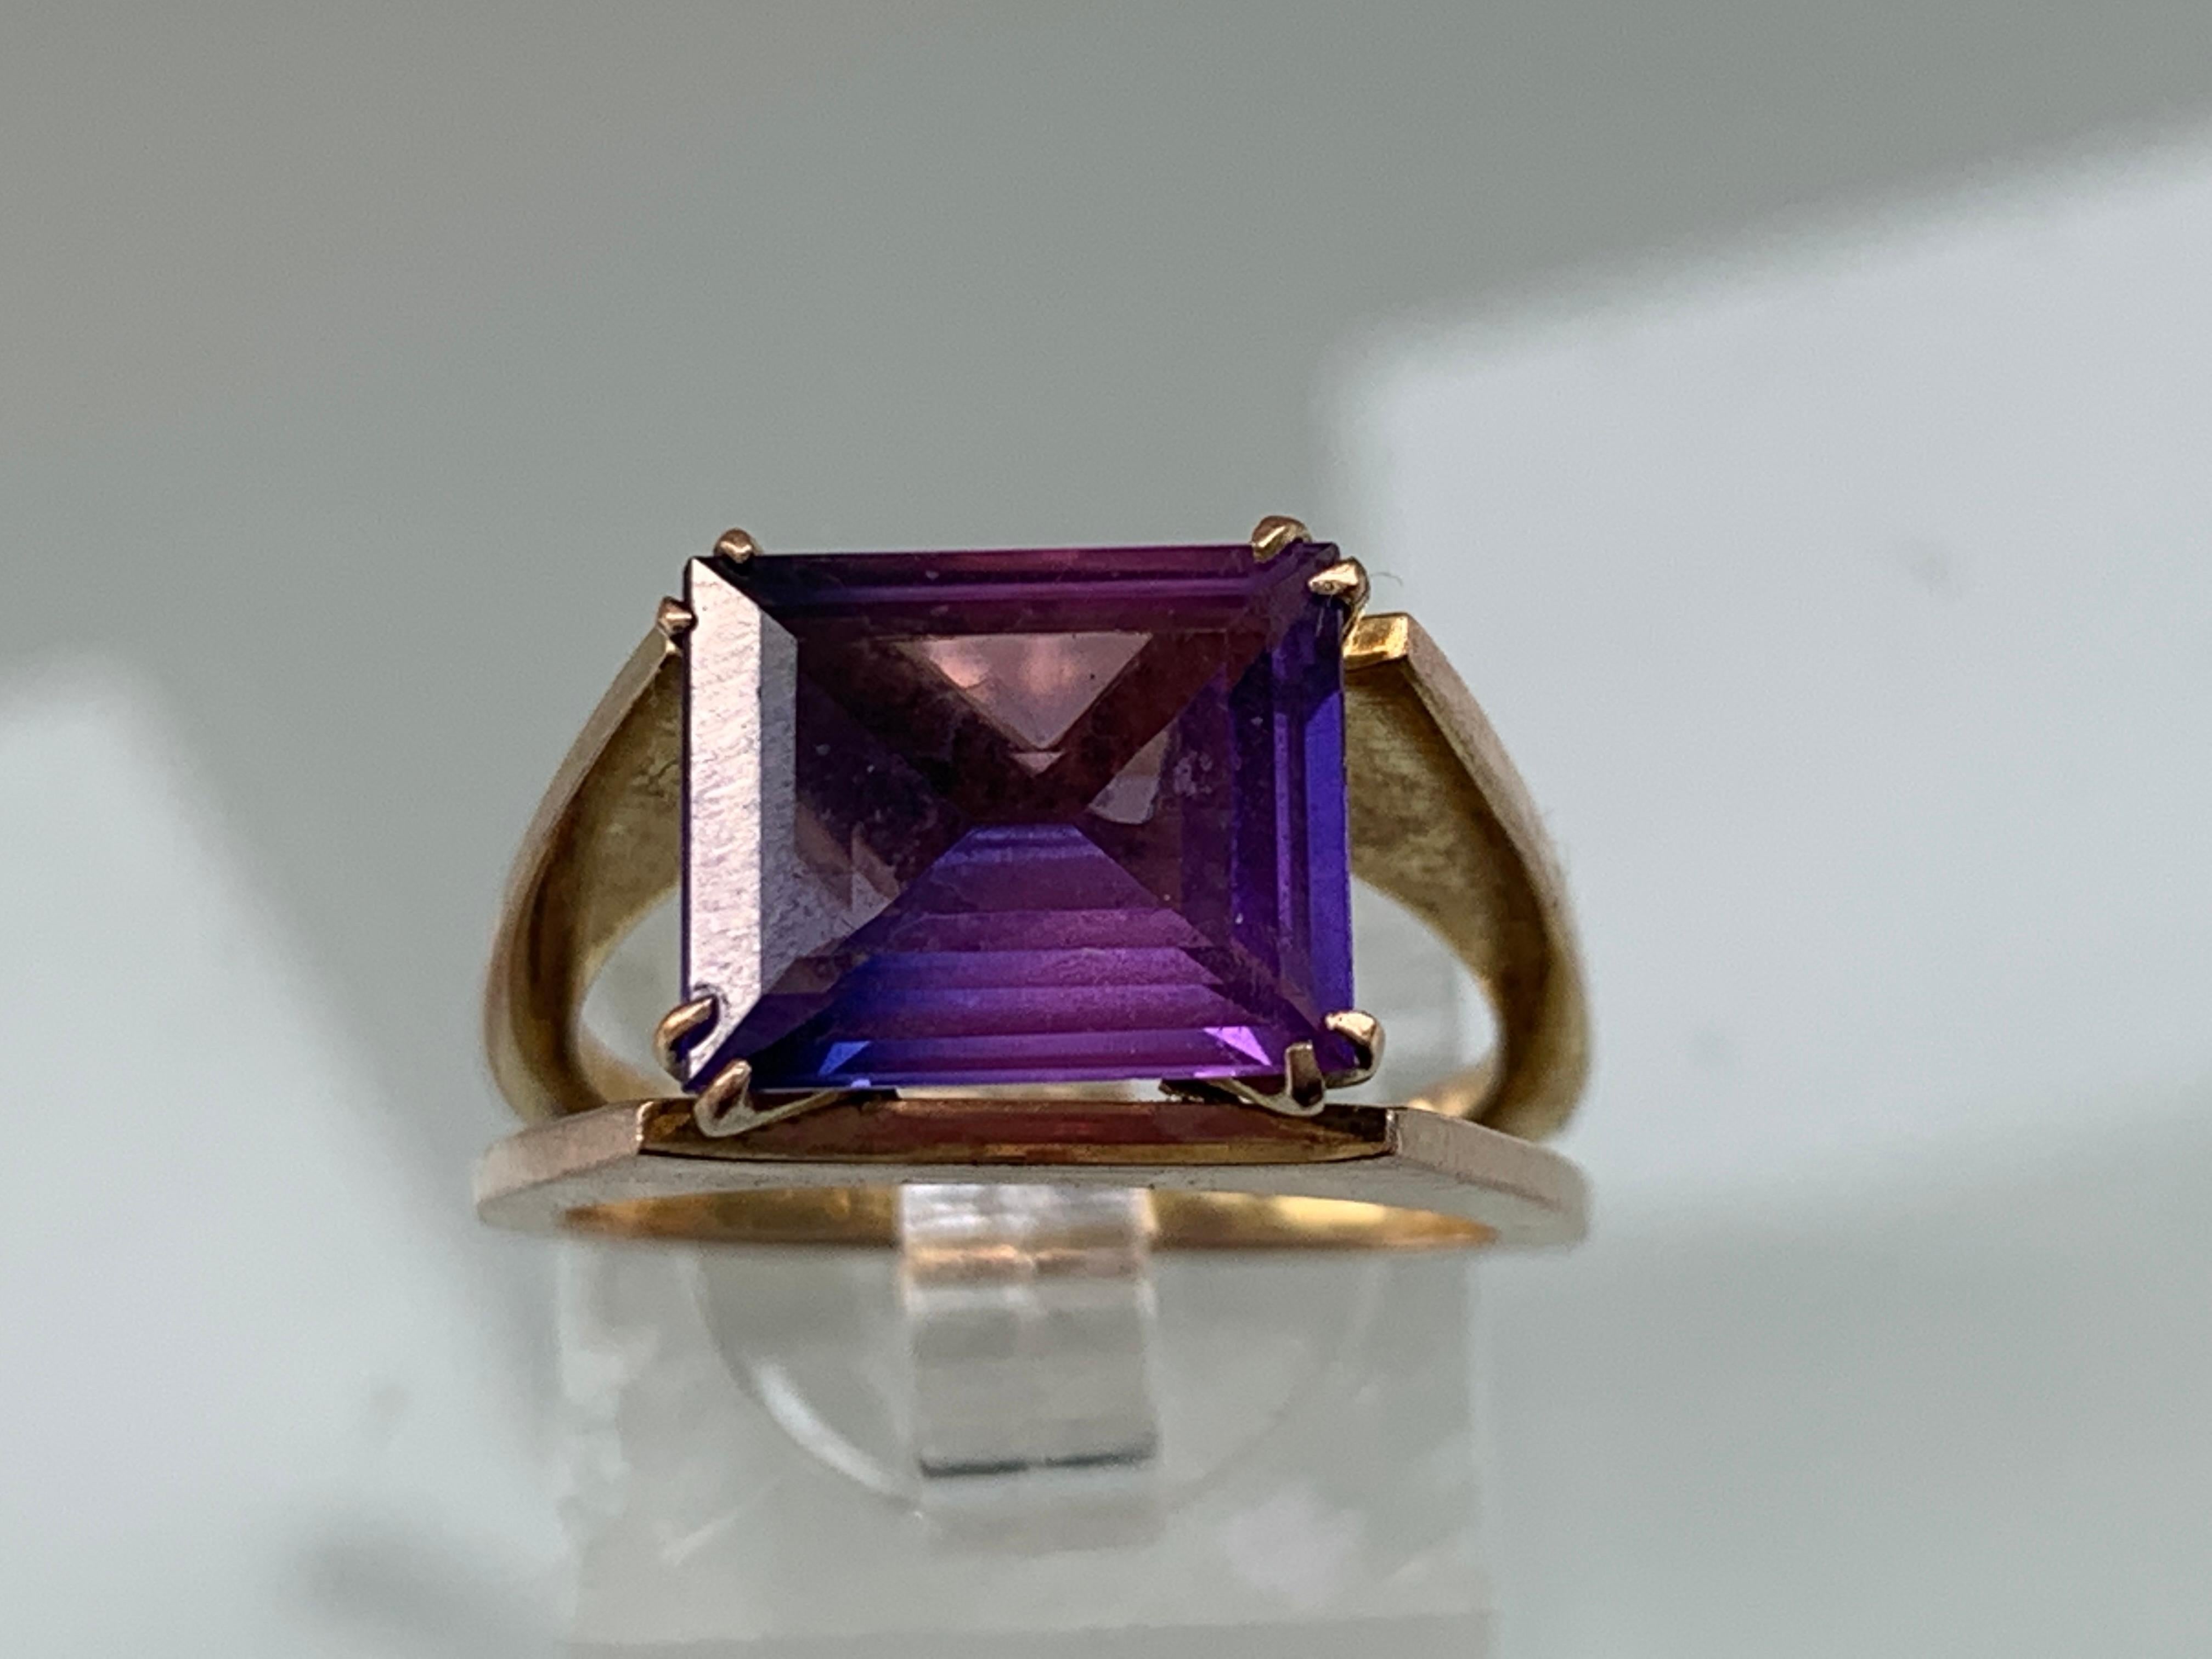 9ct 375 Gold Jack Gutschneider Designer Amethyst set Ring 
Earlier piece 1950s - 1960s 
Gemstone - unidentified Purple baguette cut stone
please see image for size